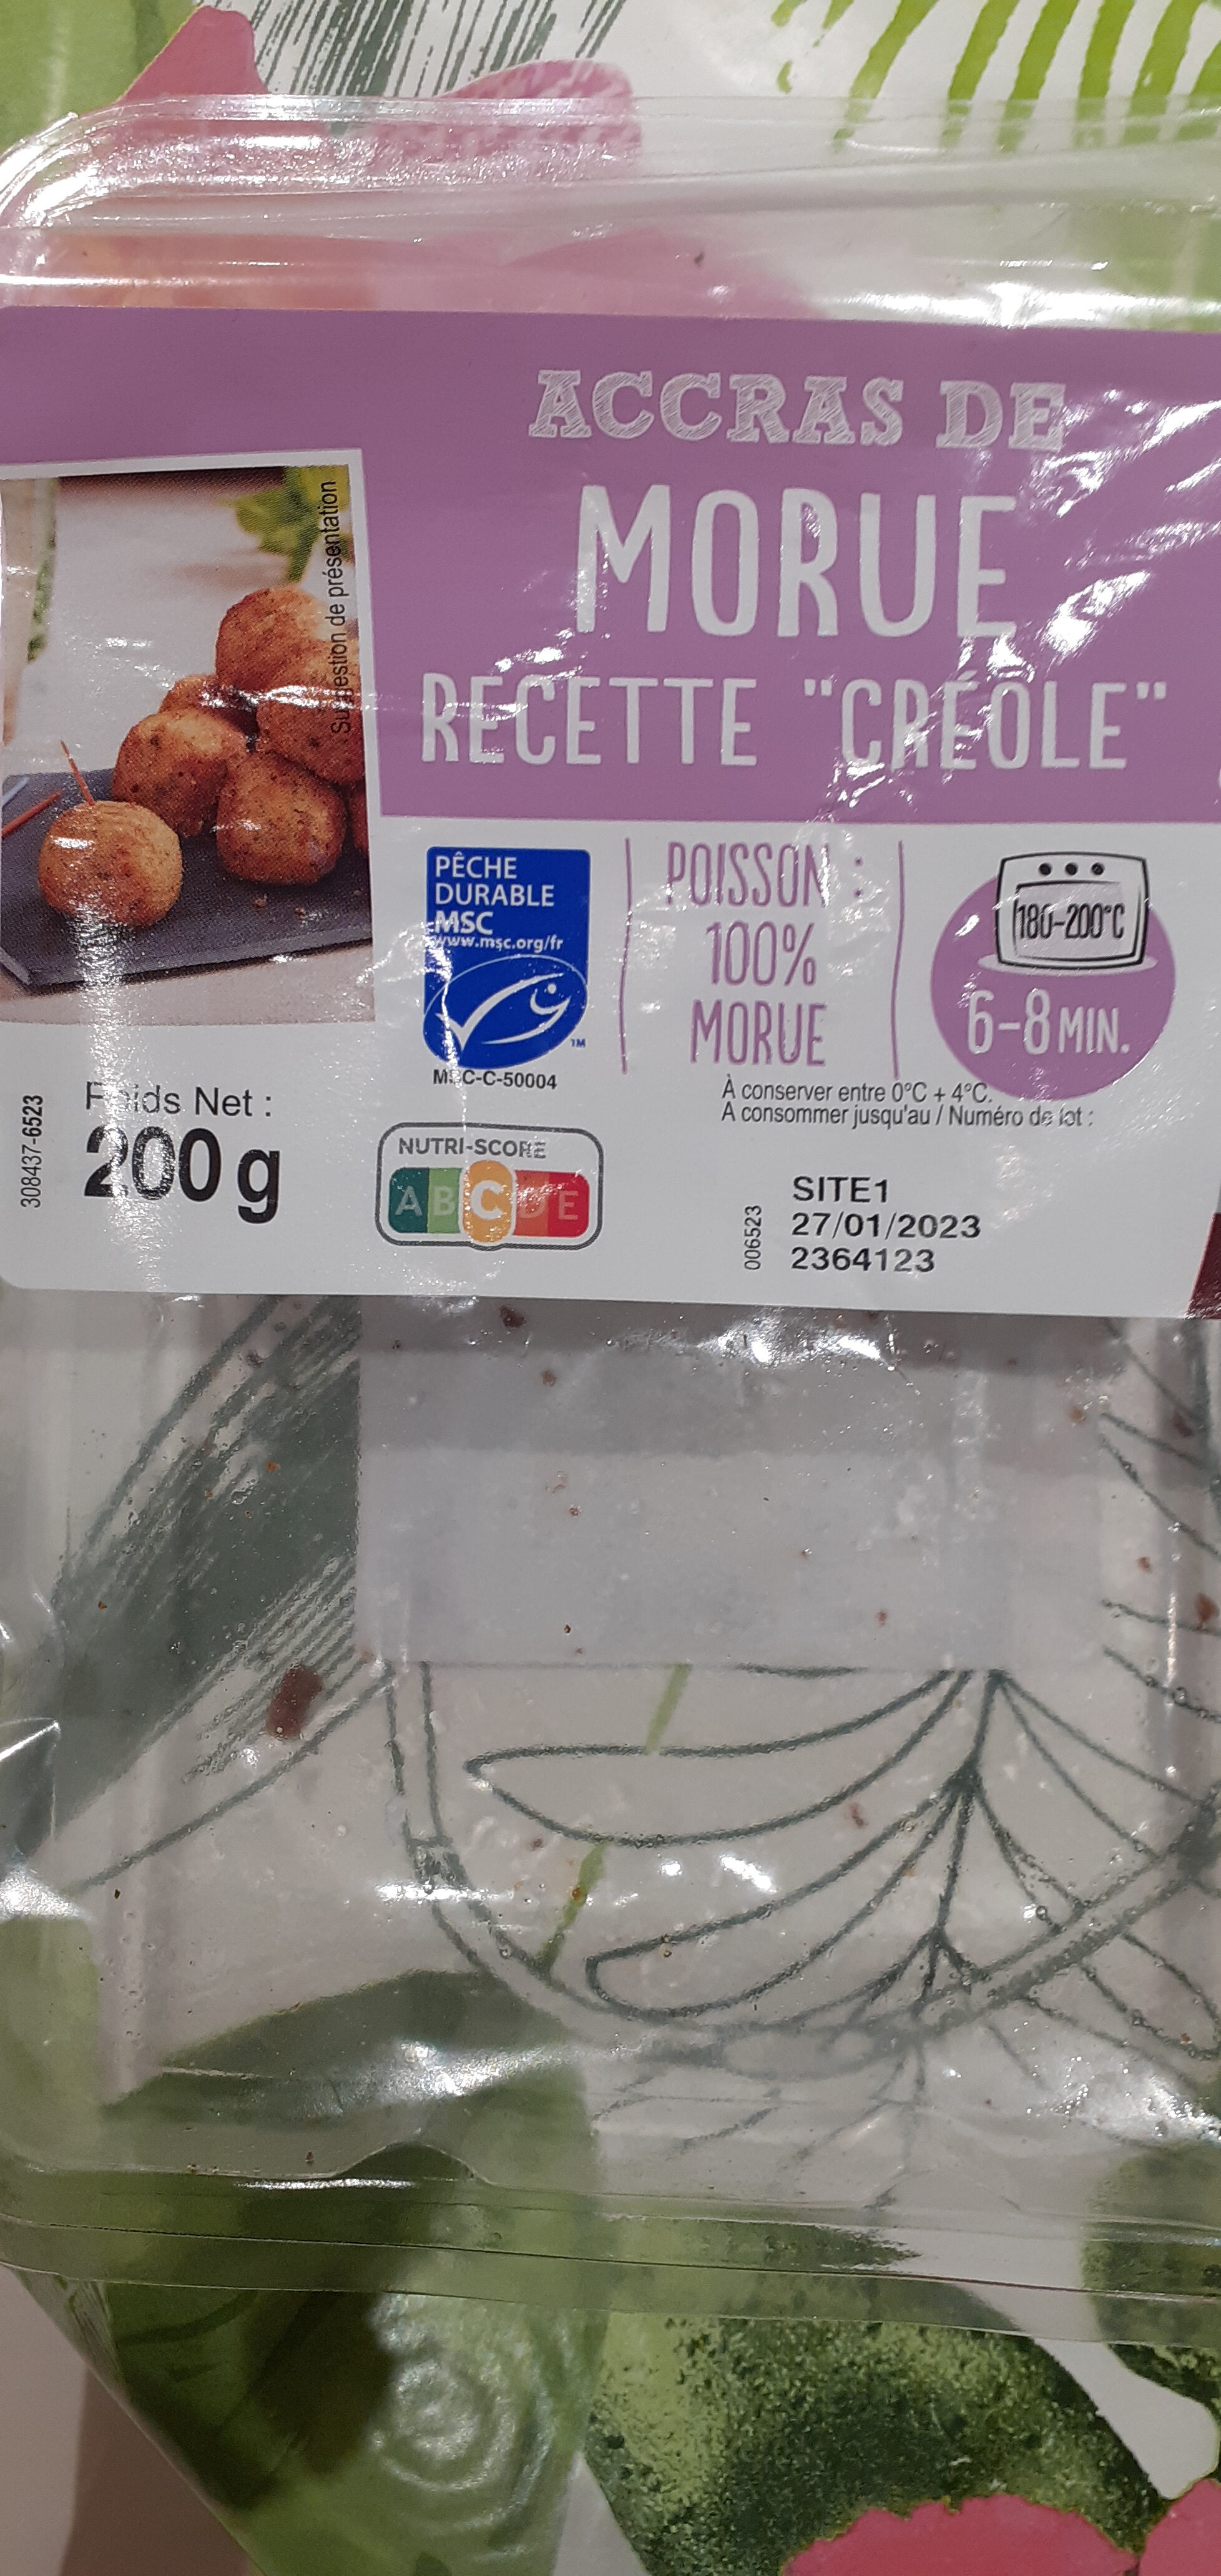 Accras de morue recette "créole" - Prodotto - fr